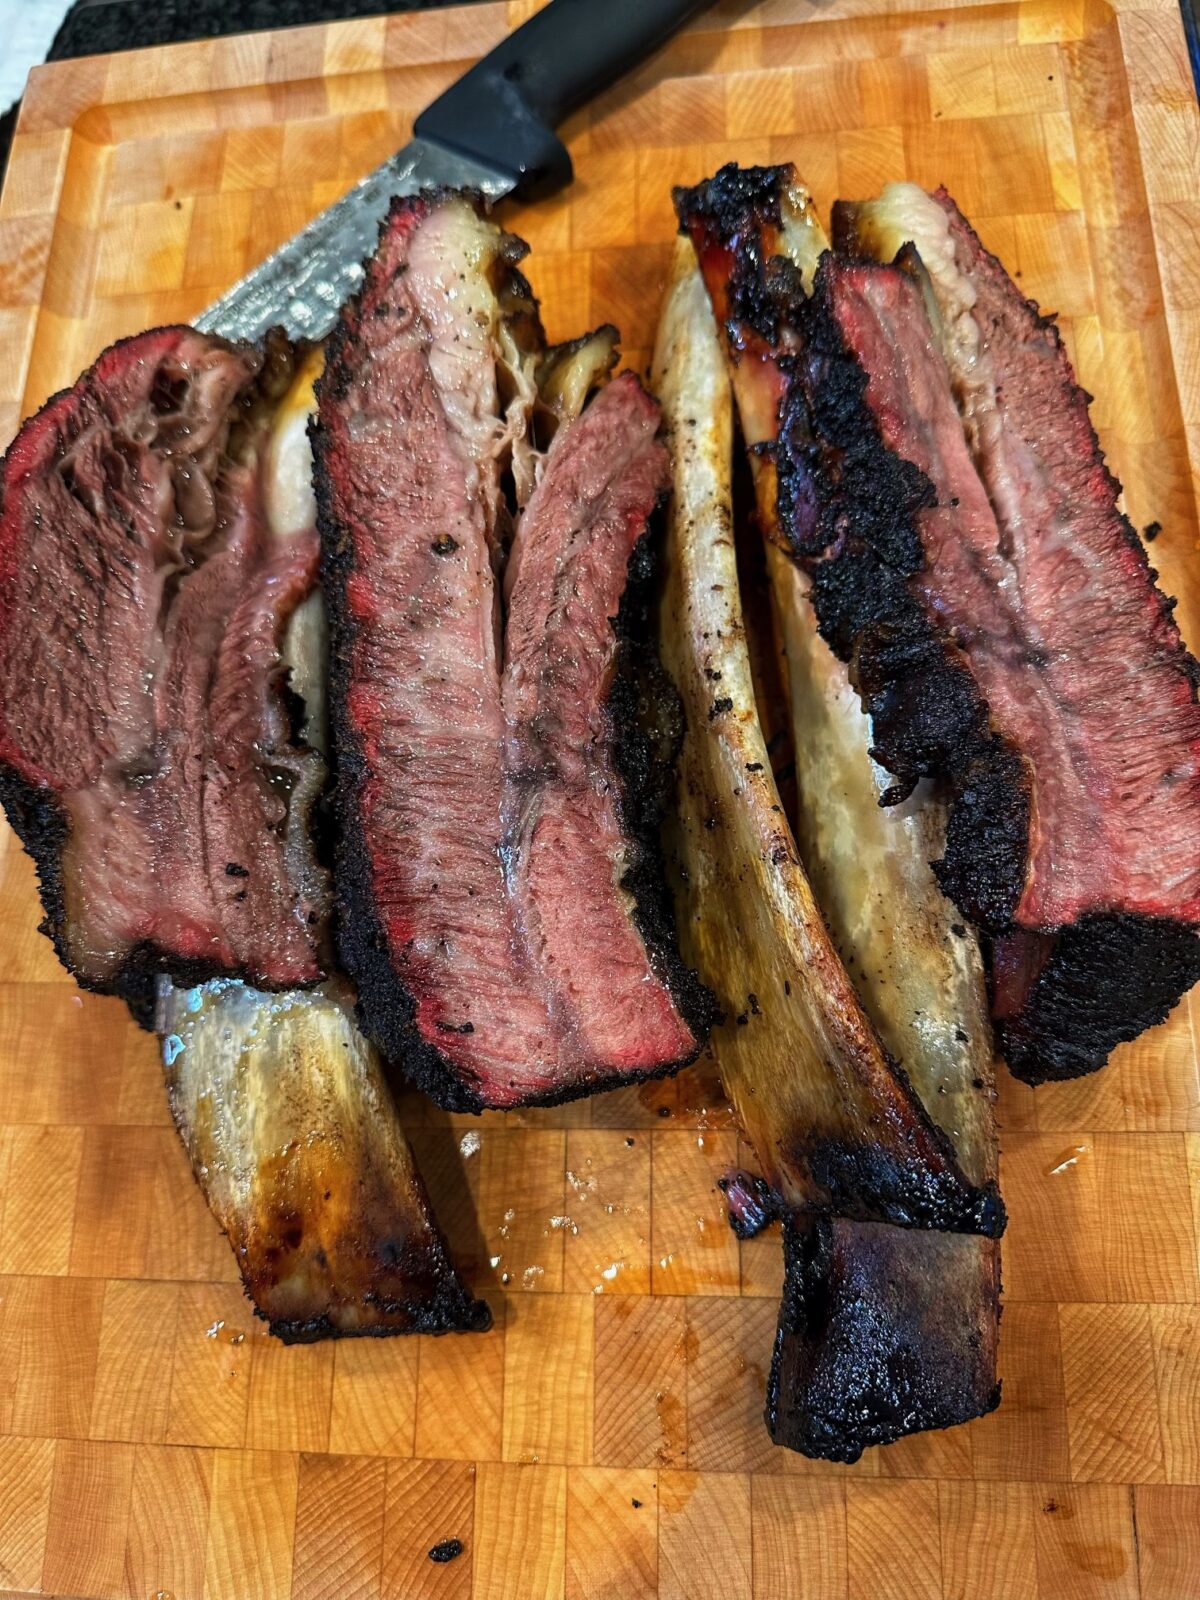 Sliced smoked beef ribs on a cutting board.